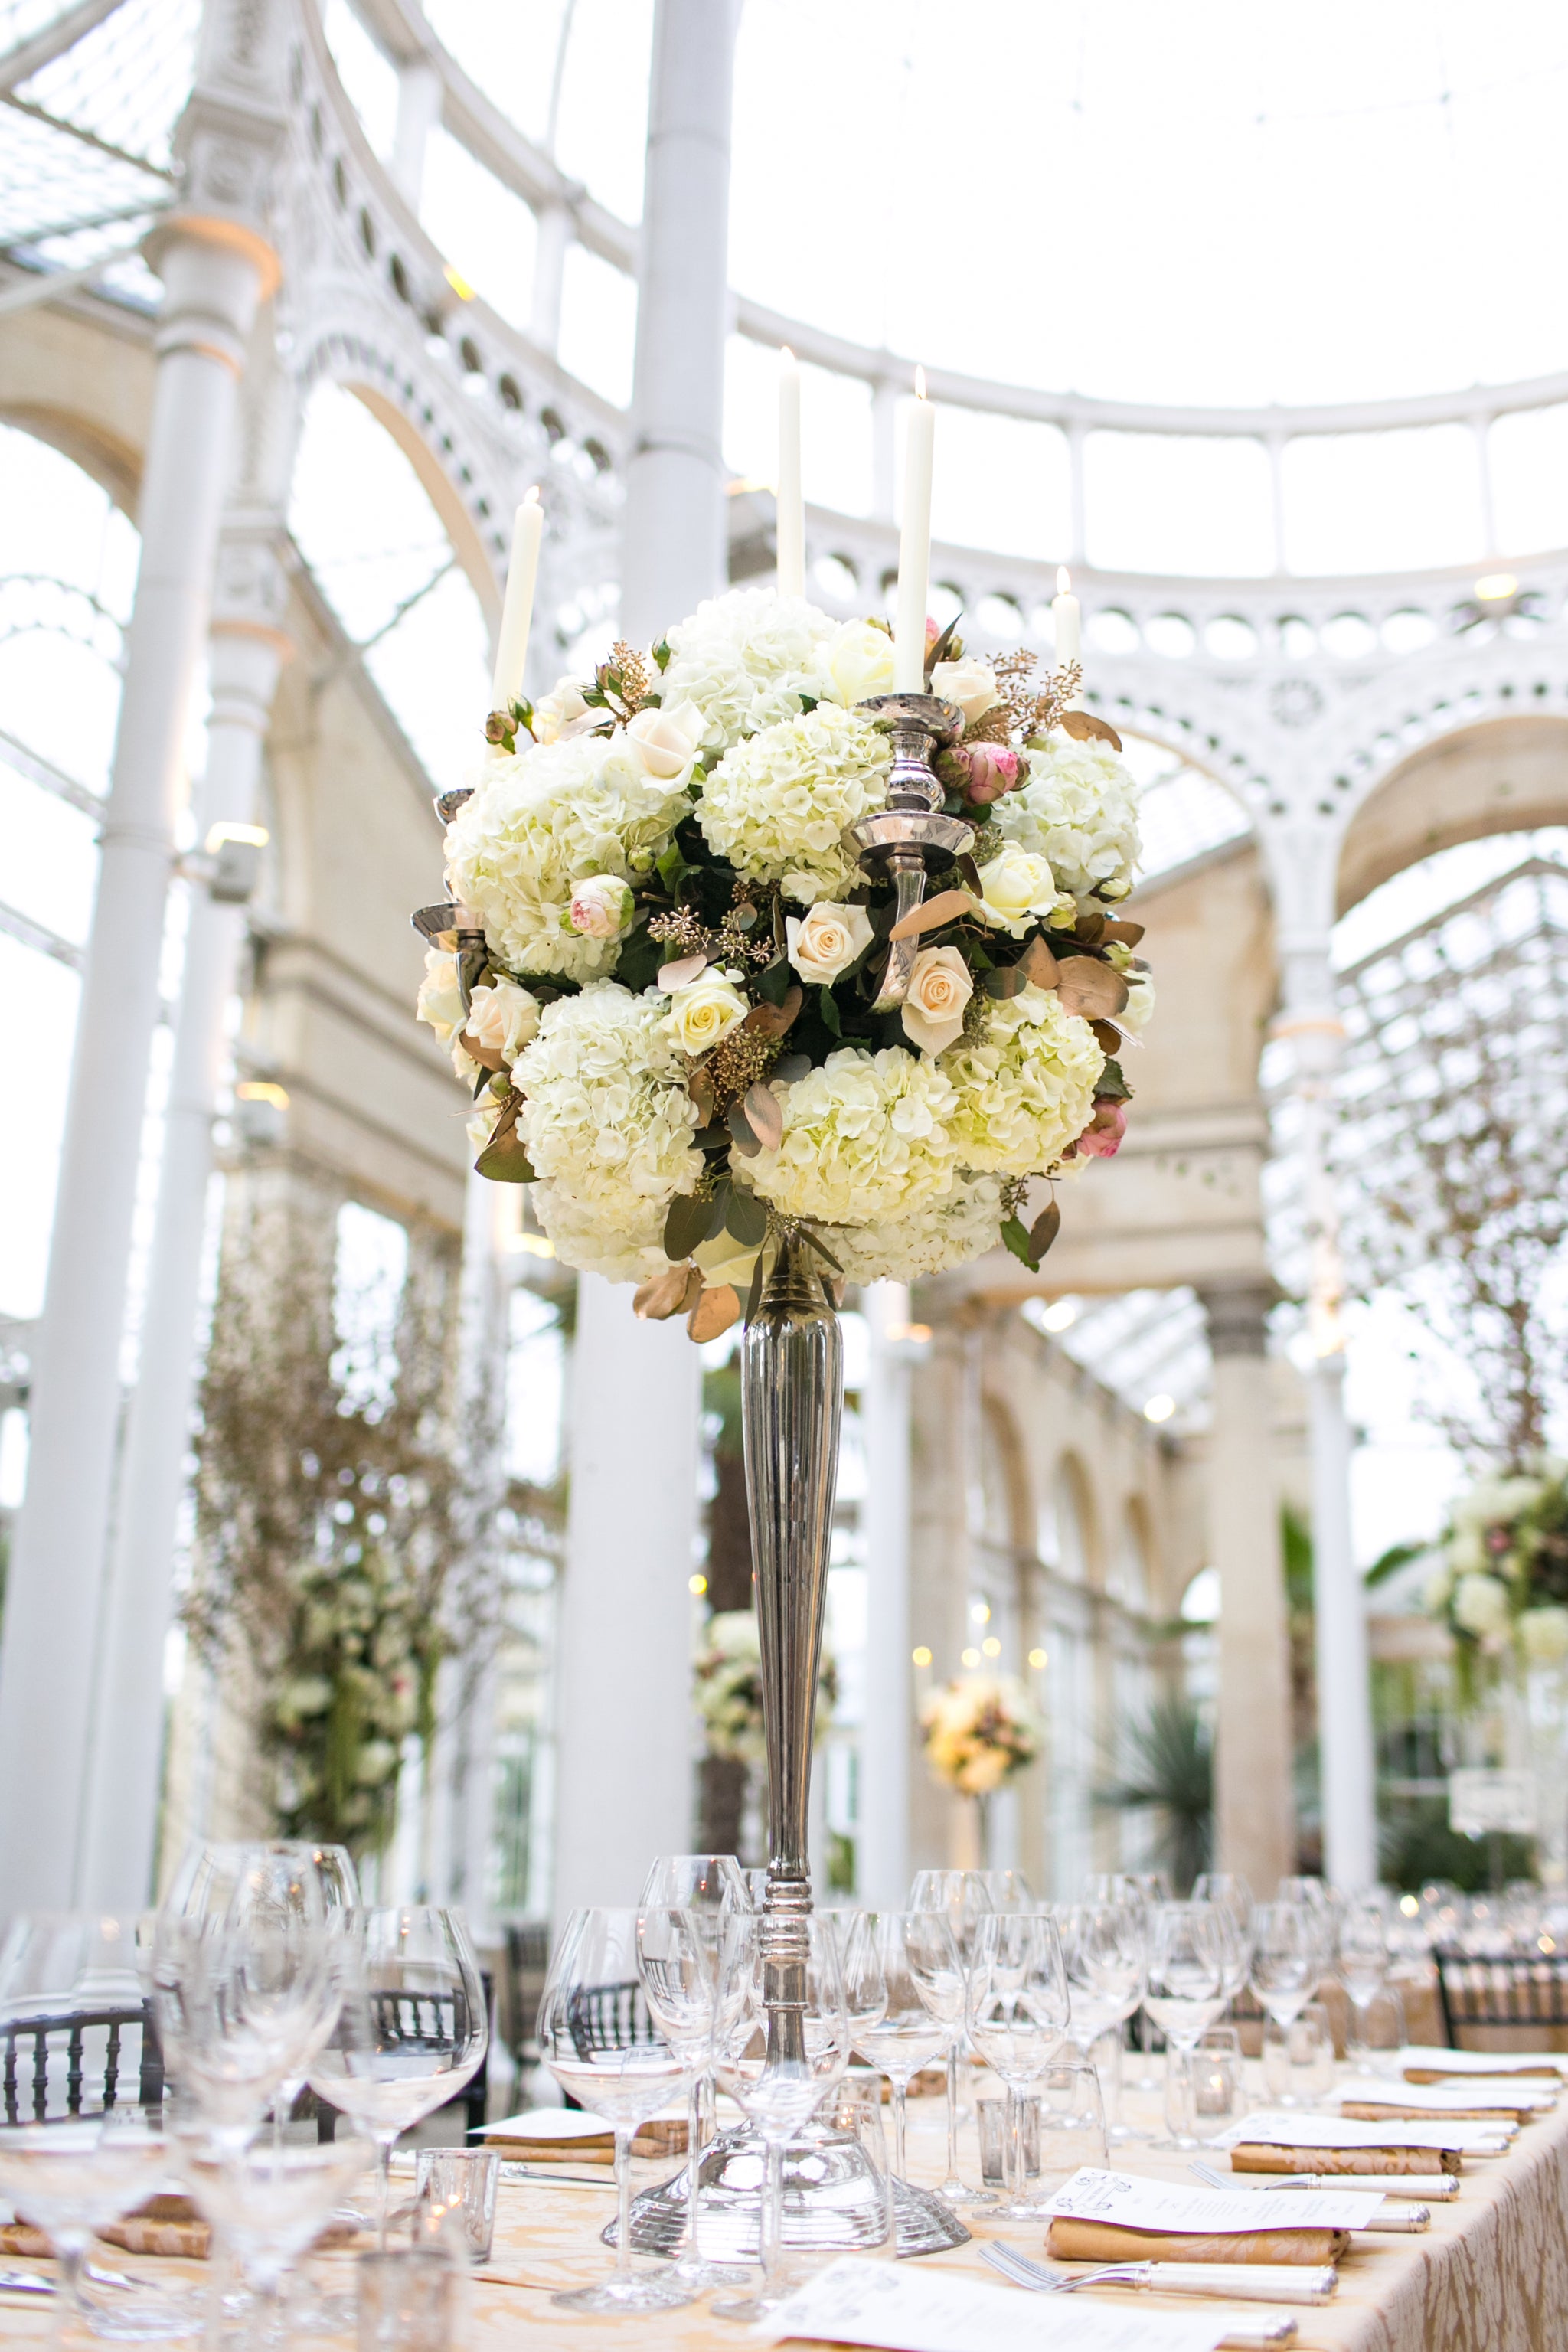 A breathtaking wedding floral display by Elizabeth Marsh at Syon Park. Photo by Anneli Marinovich. 